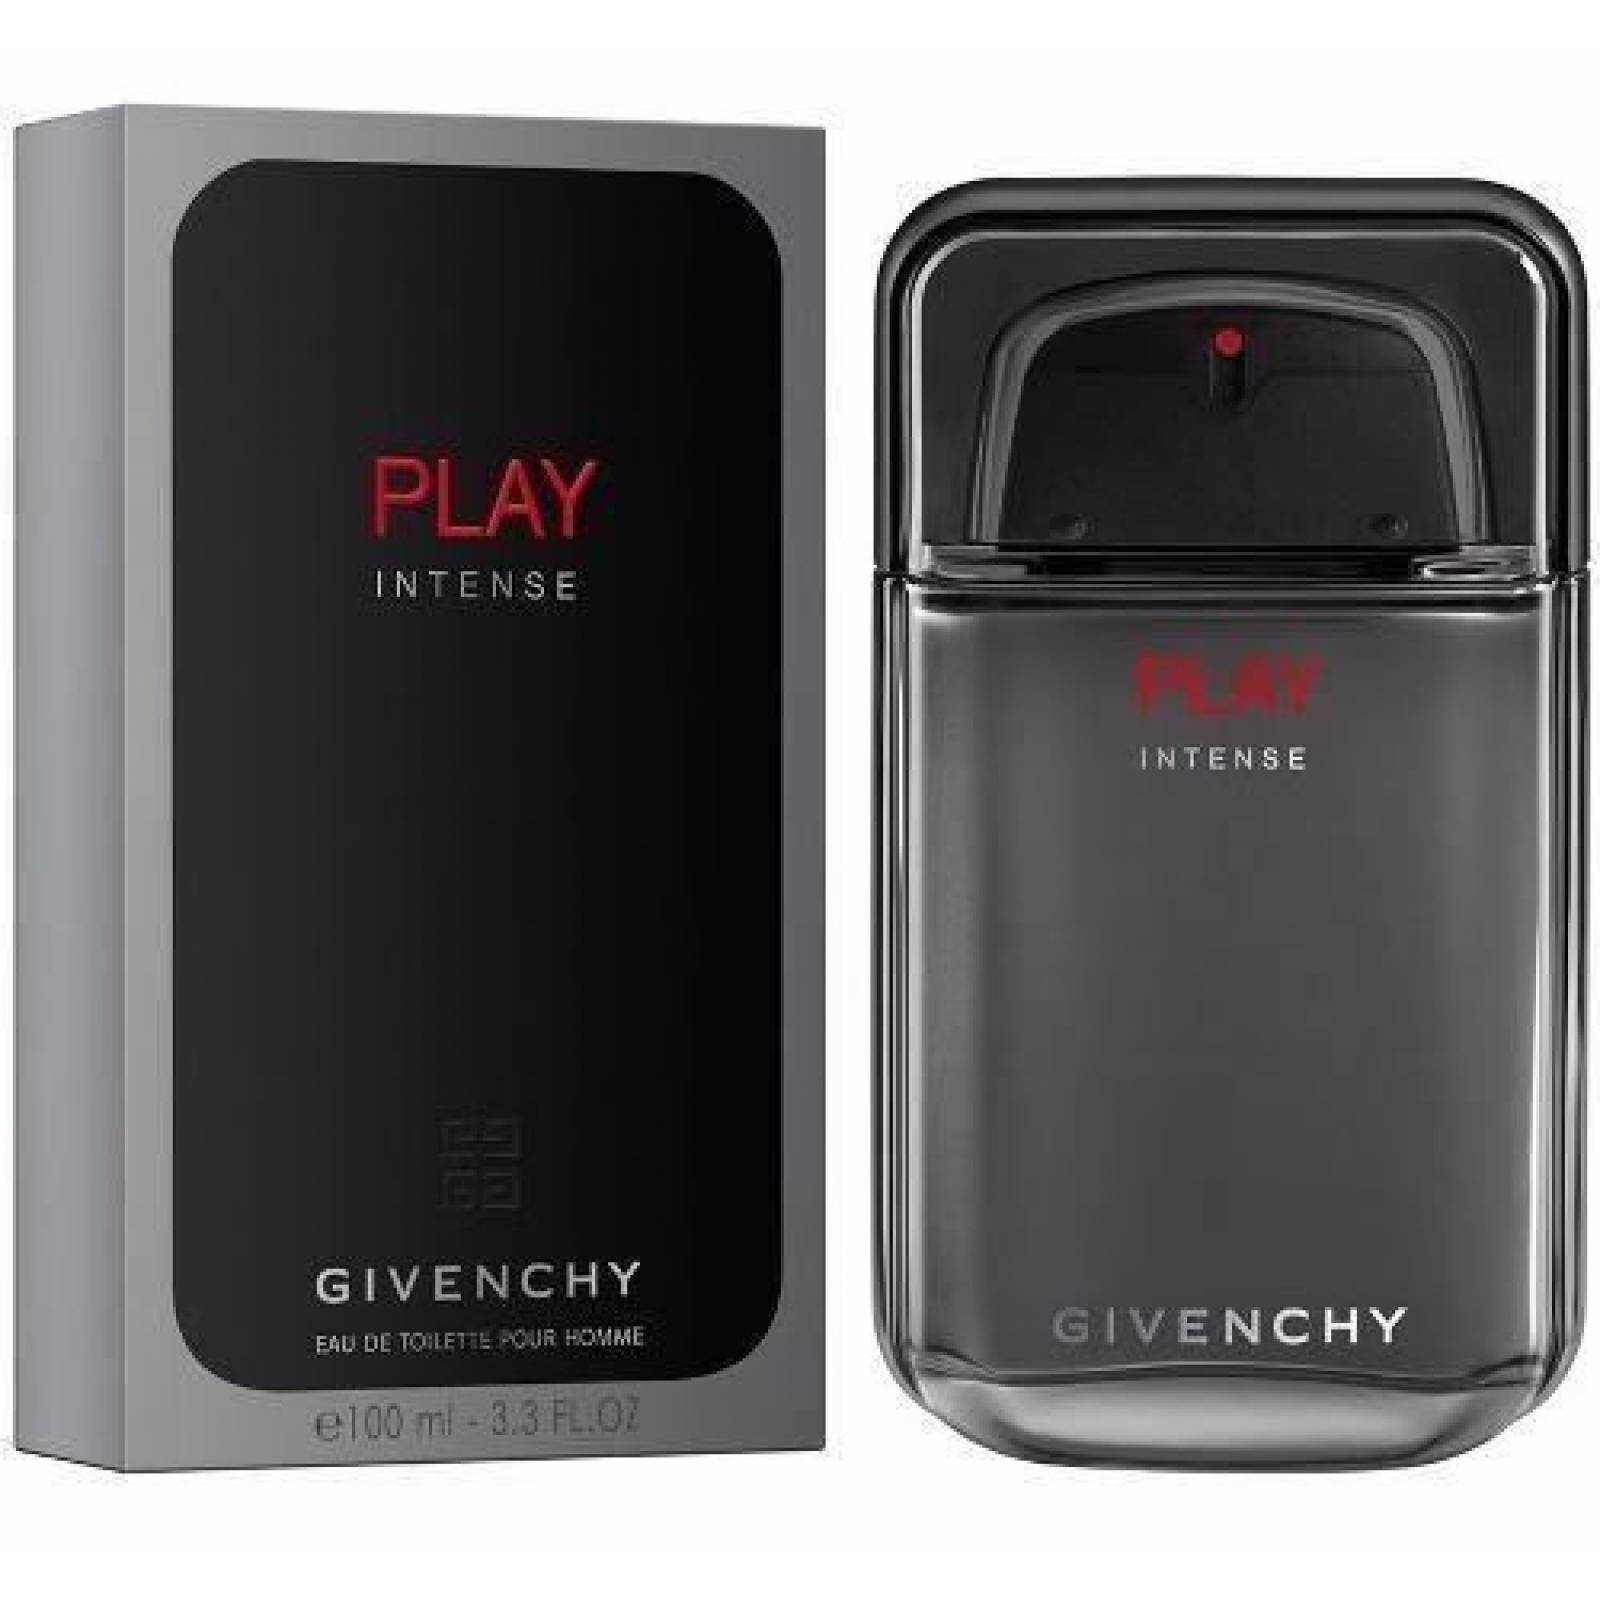 Play Intense Caballero Givenchy 100 Ml - Perfume Original